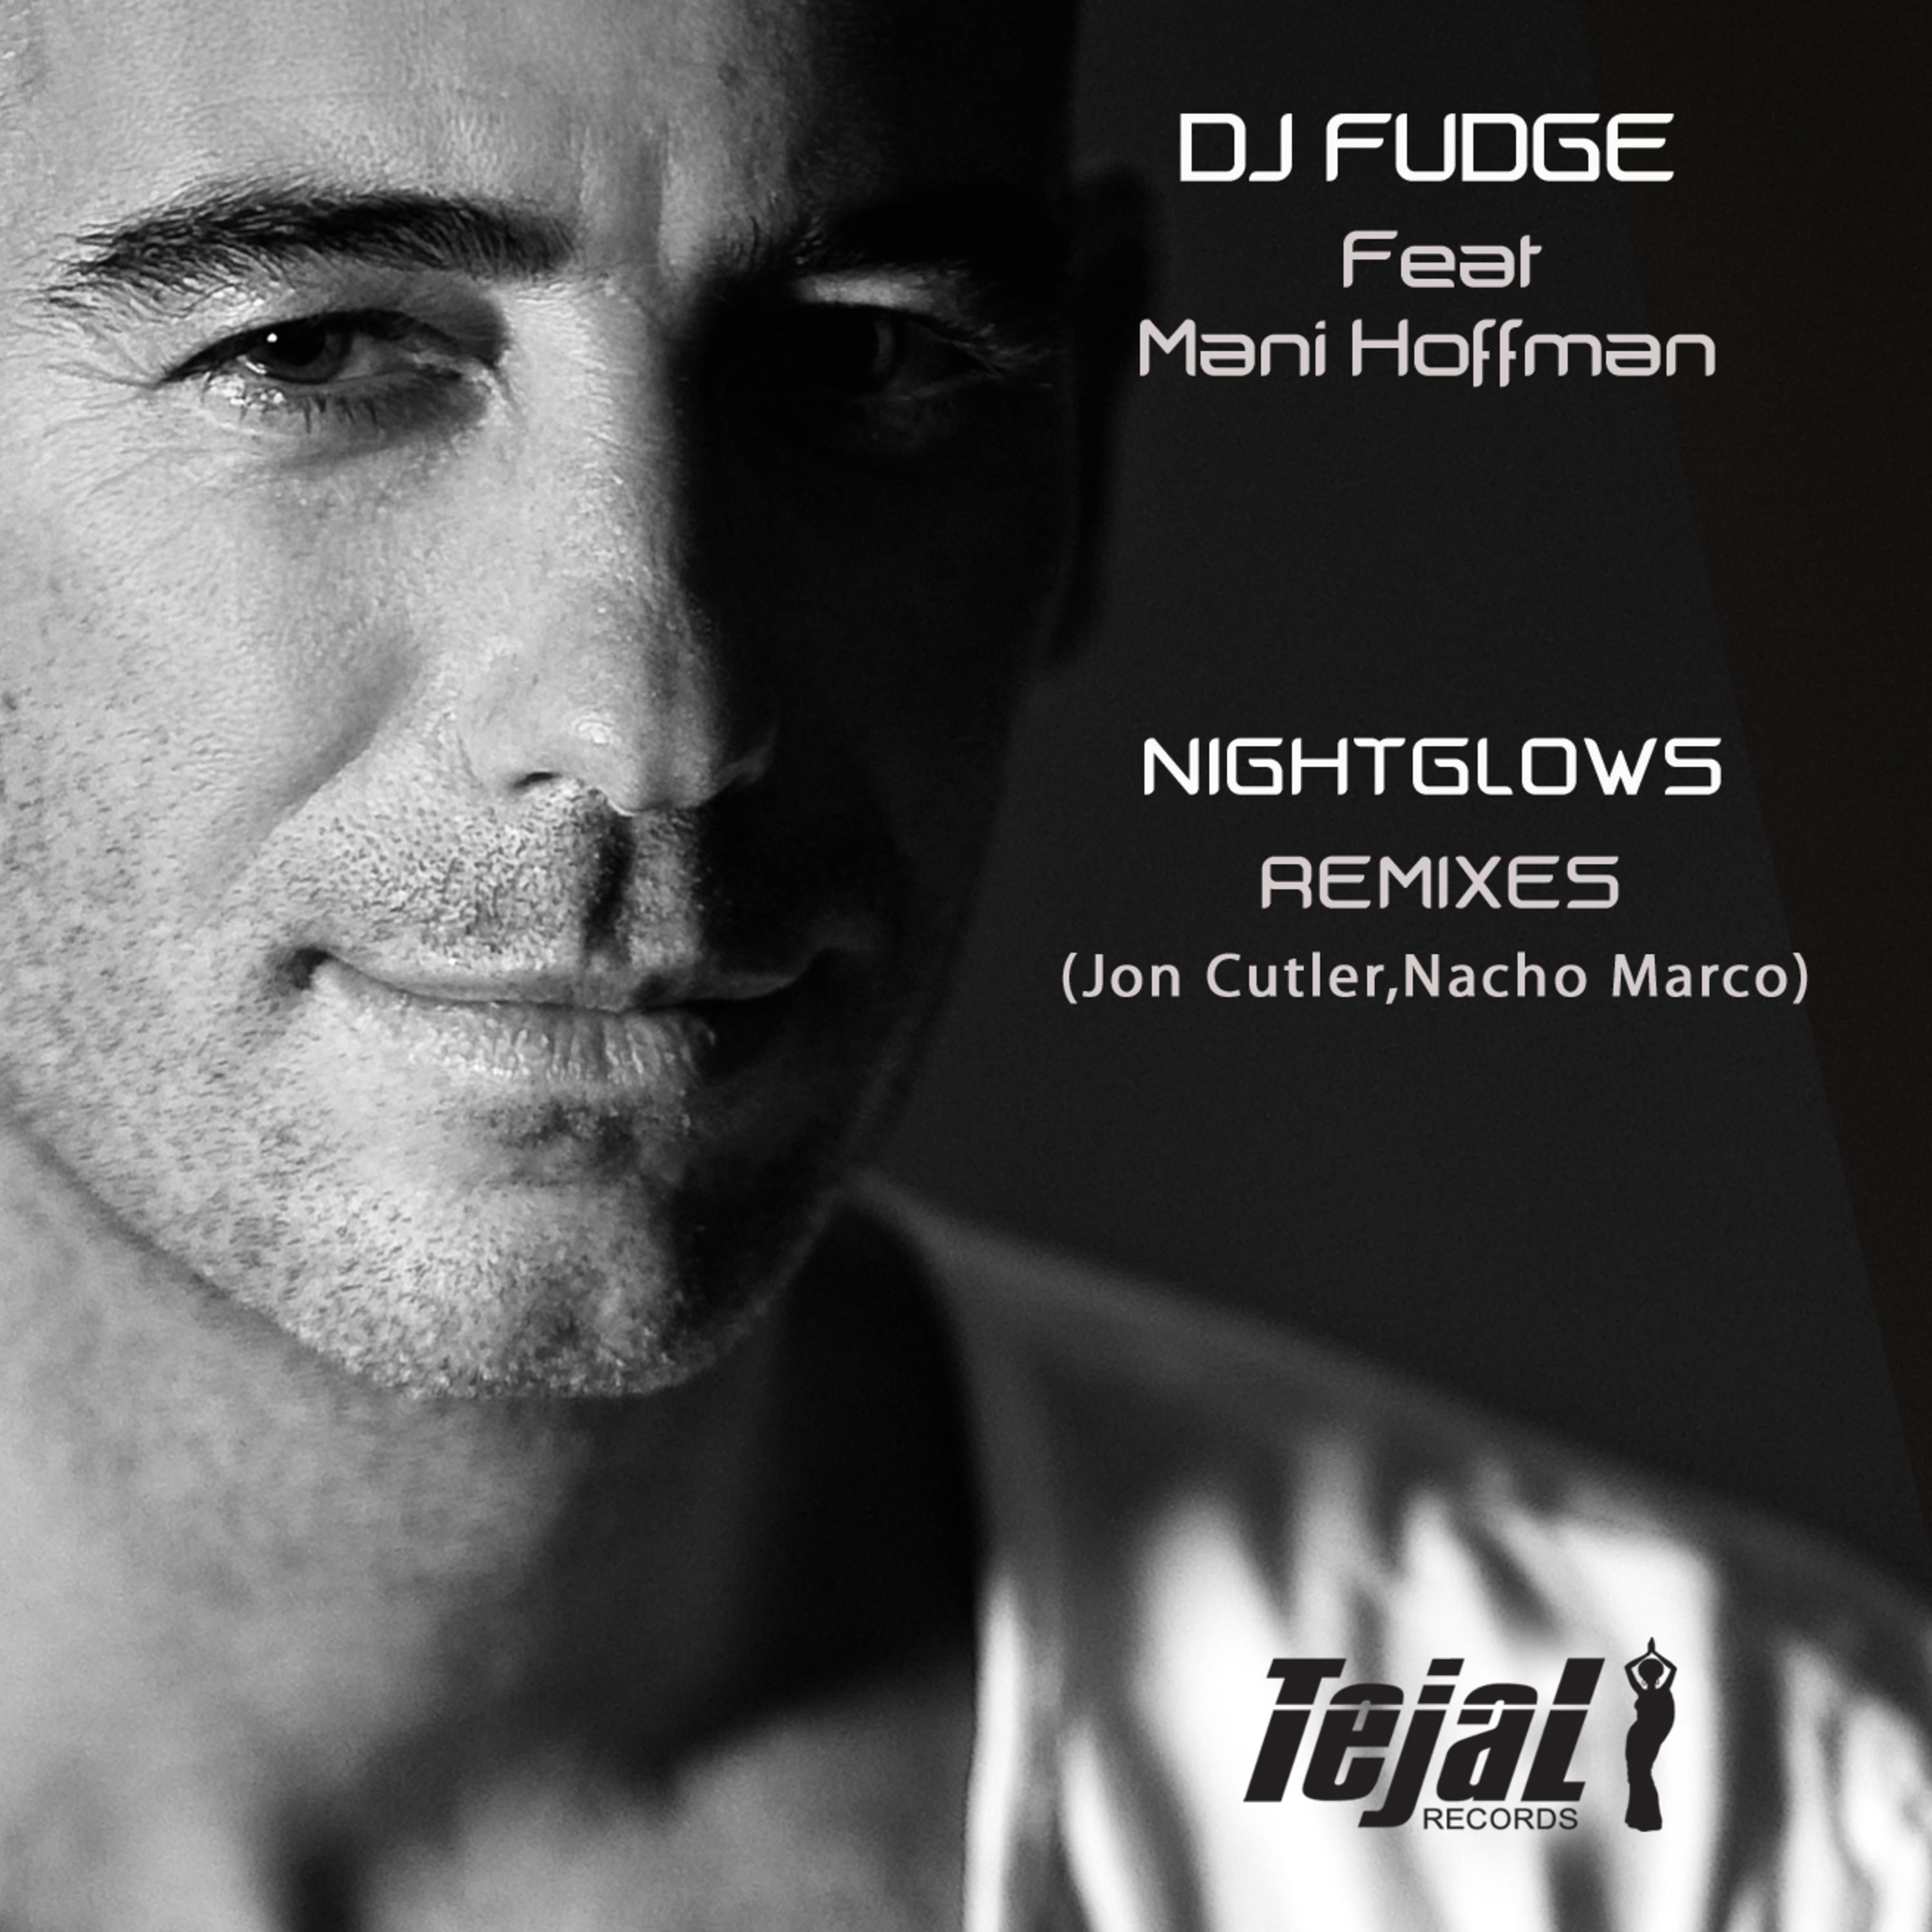 Nightglows (Dj Fudge 3 chords Mix)